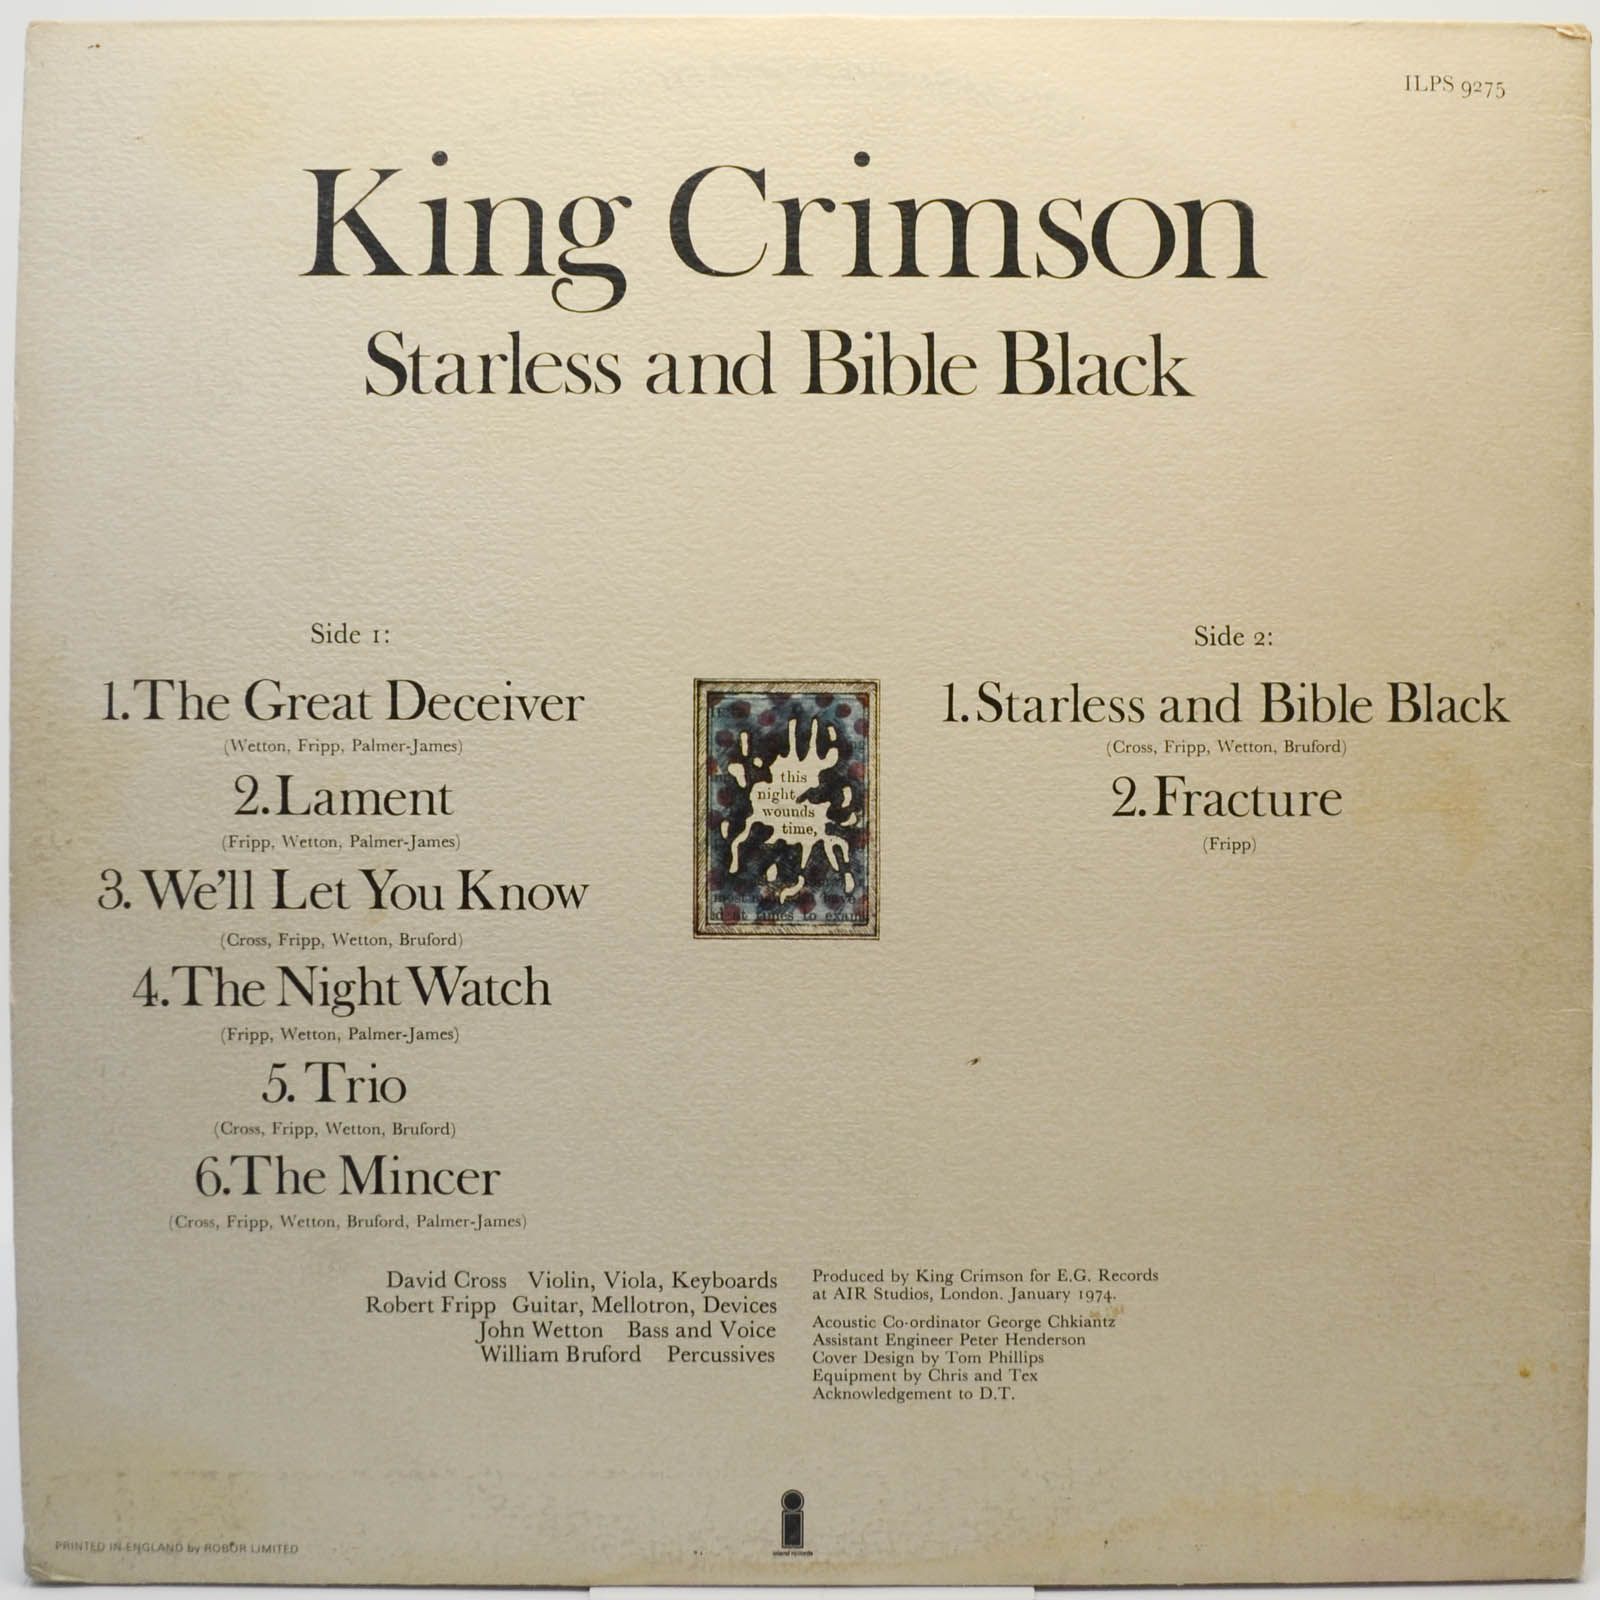 King Crimson — Starless And Bible Black (1-st, UK), 1974